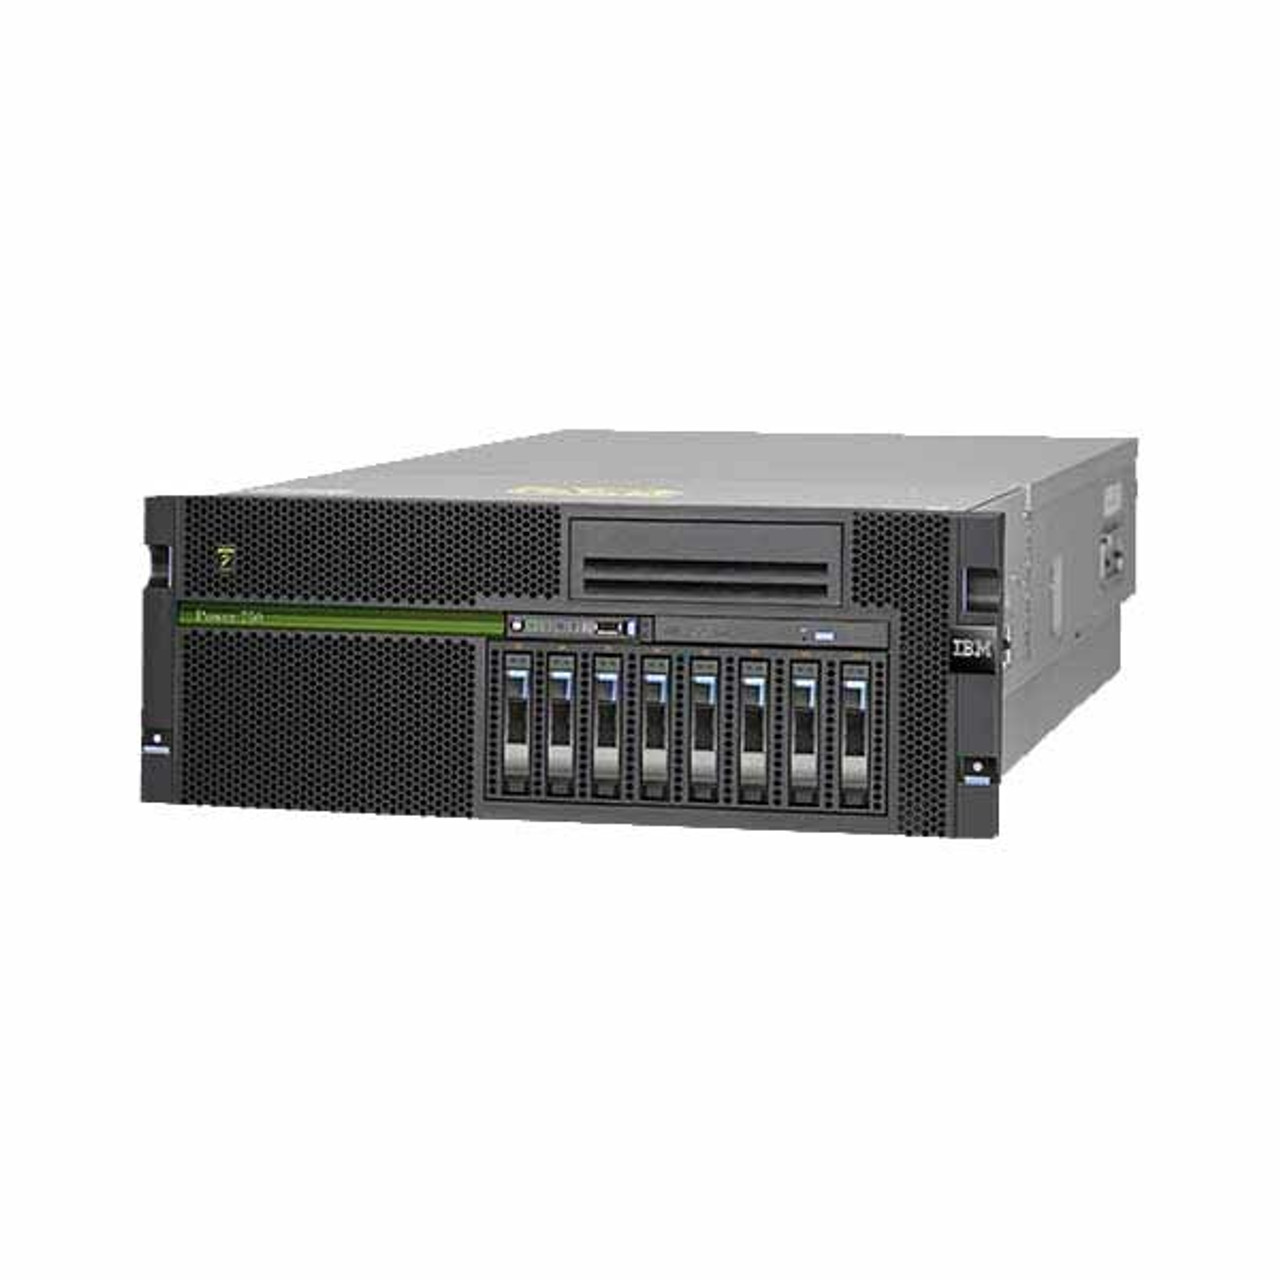 IBM 8408-E8D pSeries Servers